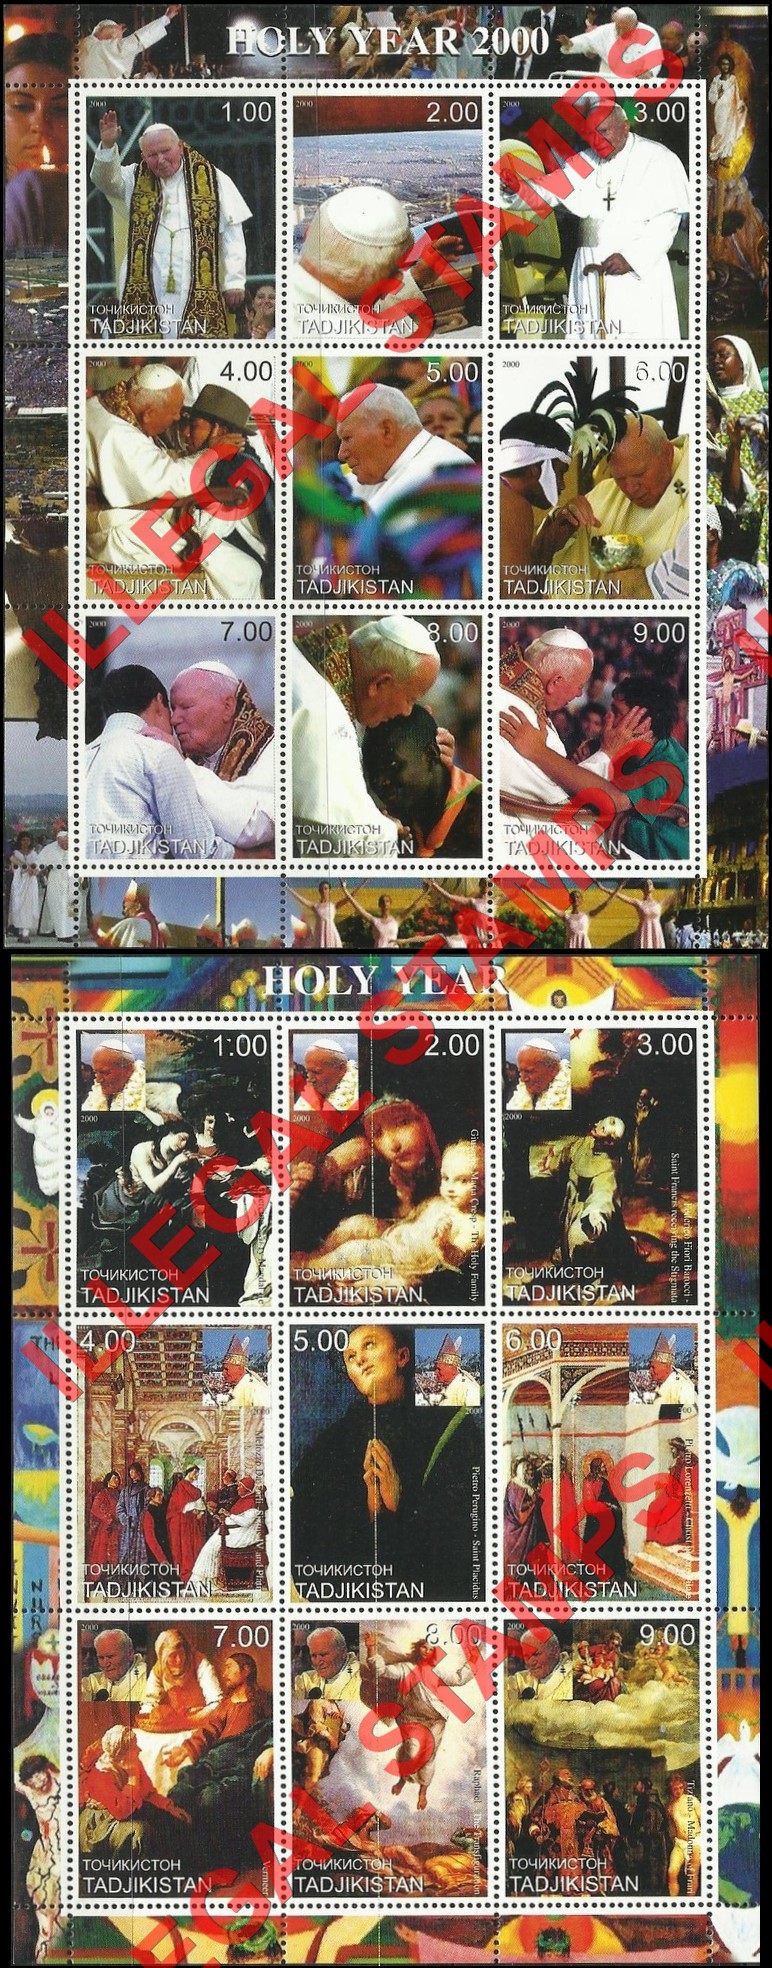 Tajikistan 2000 Pope John Paul II Holy Year Illegal Stamp Souvenir Sheets of 9